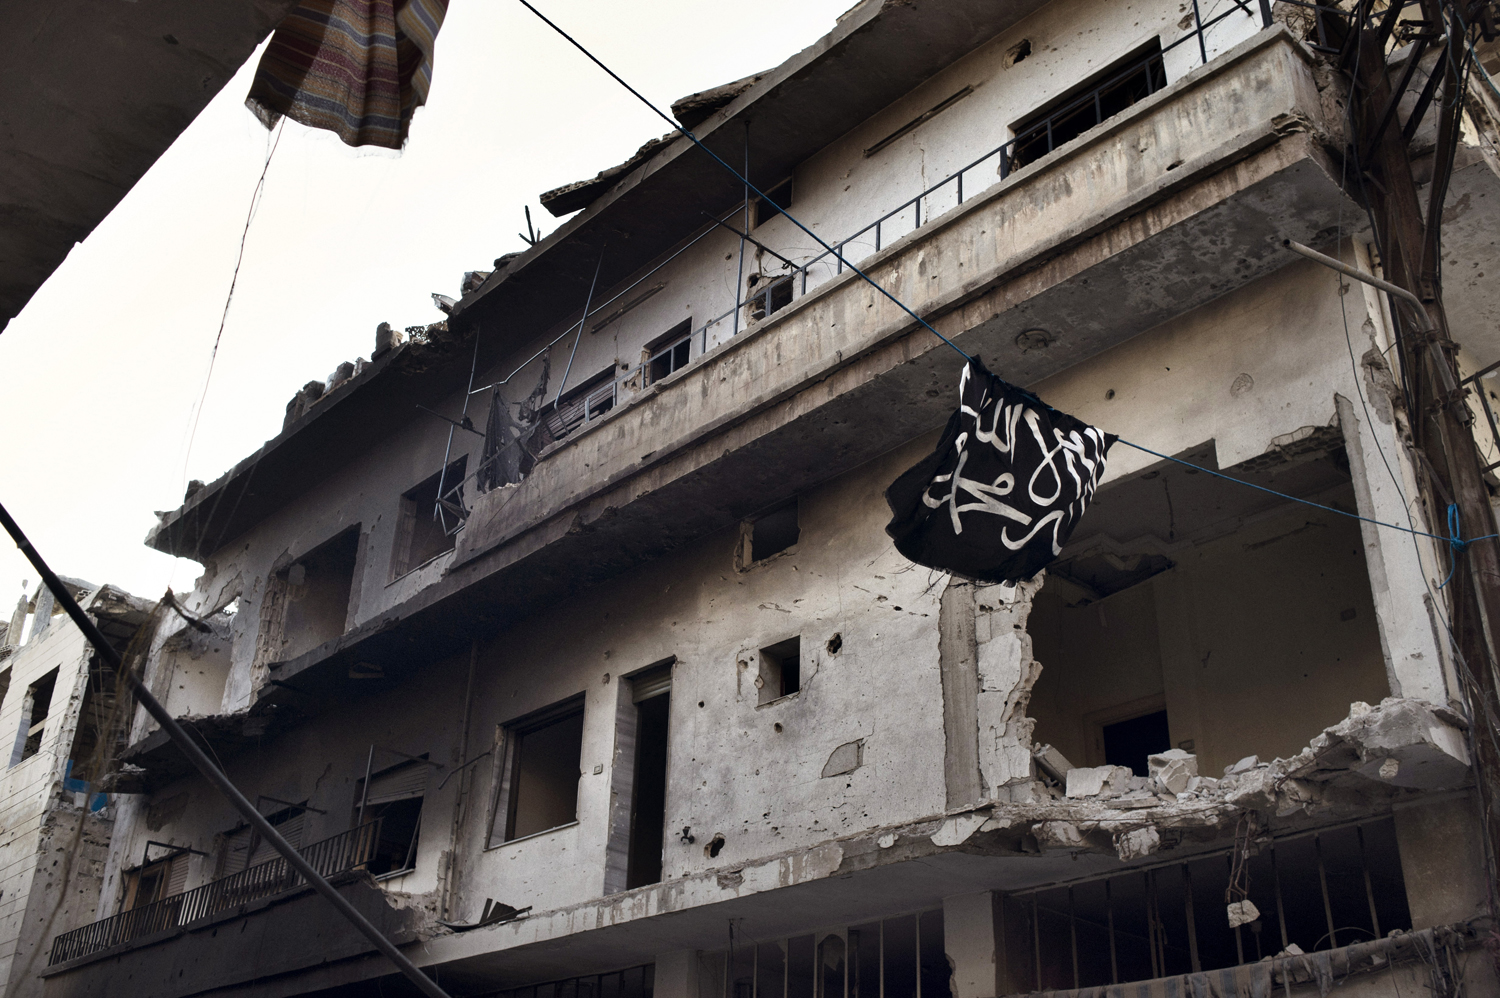 Qaeda's flag is seen flying at the Qarabis neighborhood in the Old City of Homs, May 12, 2014.